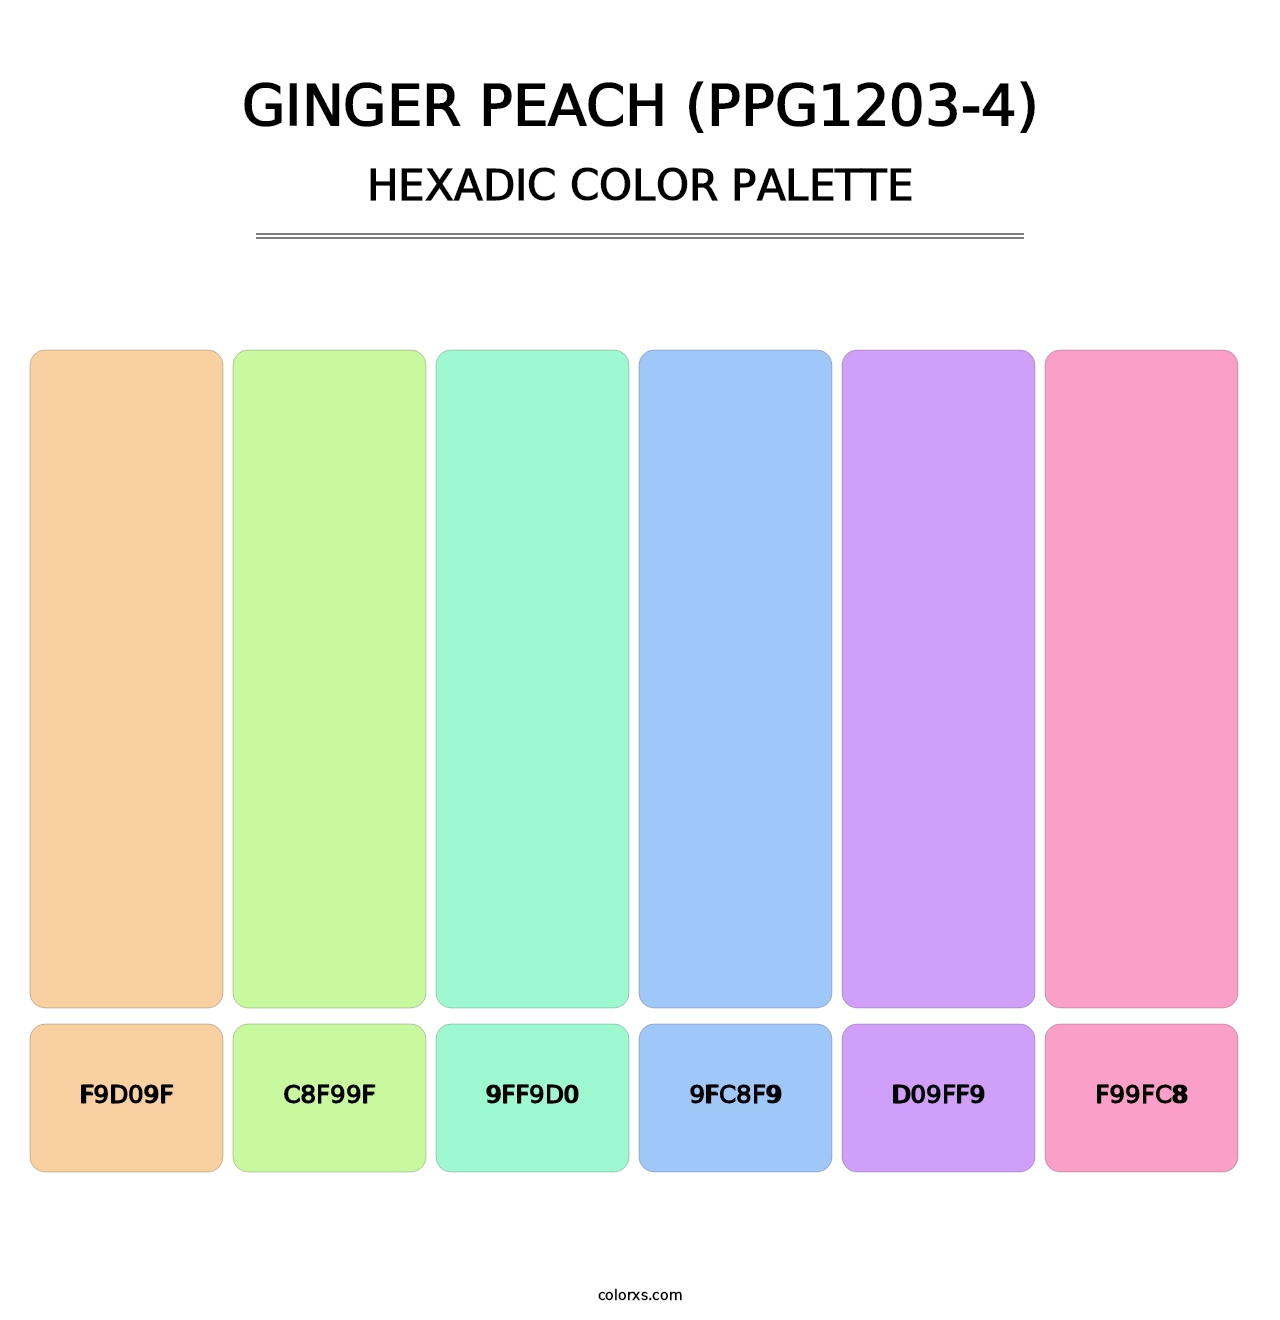 Ginger Peach (PPG1203-4) - Hexadic Color Palette